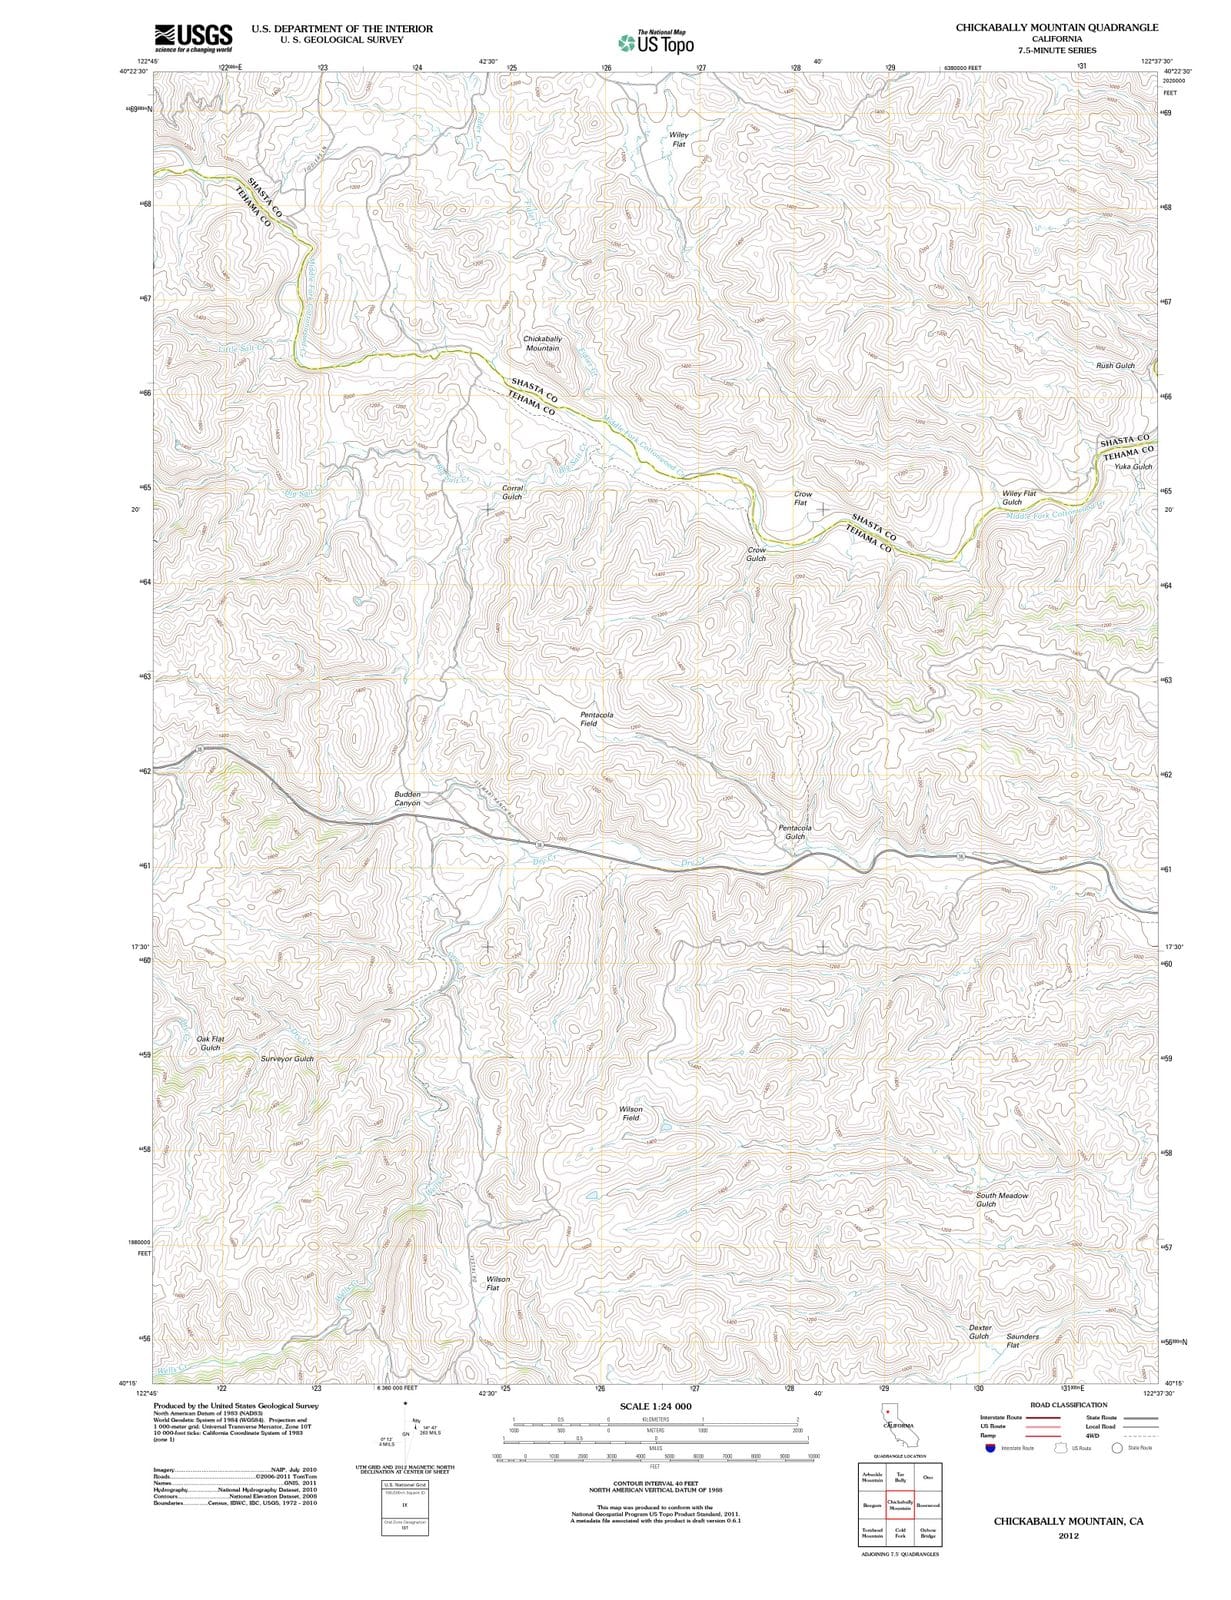 2012 Chickabally Mountain, CA - California - USGS Topographic Map